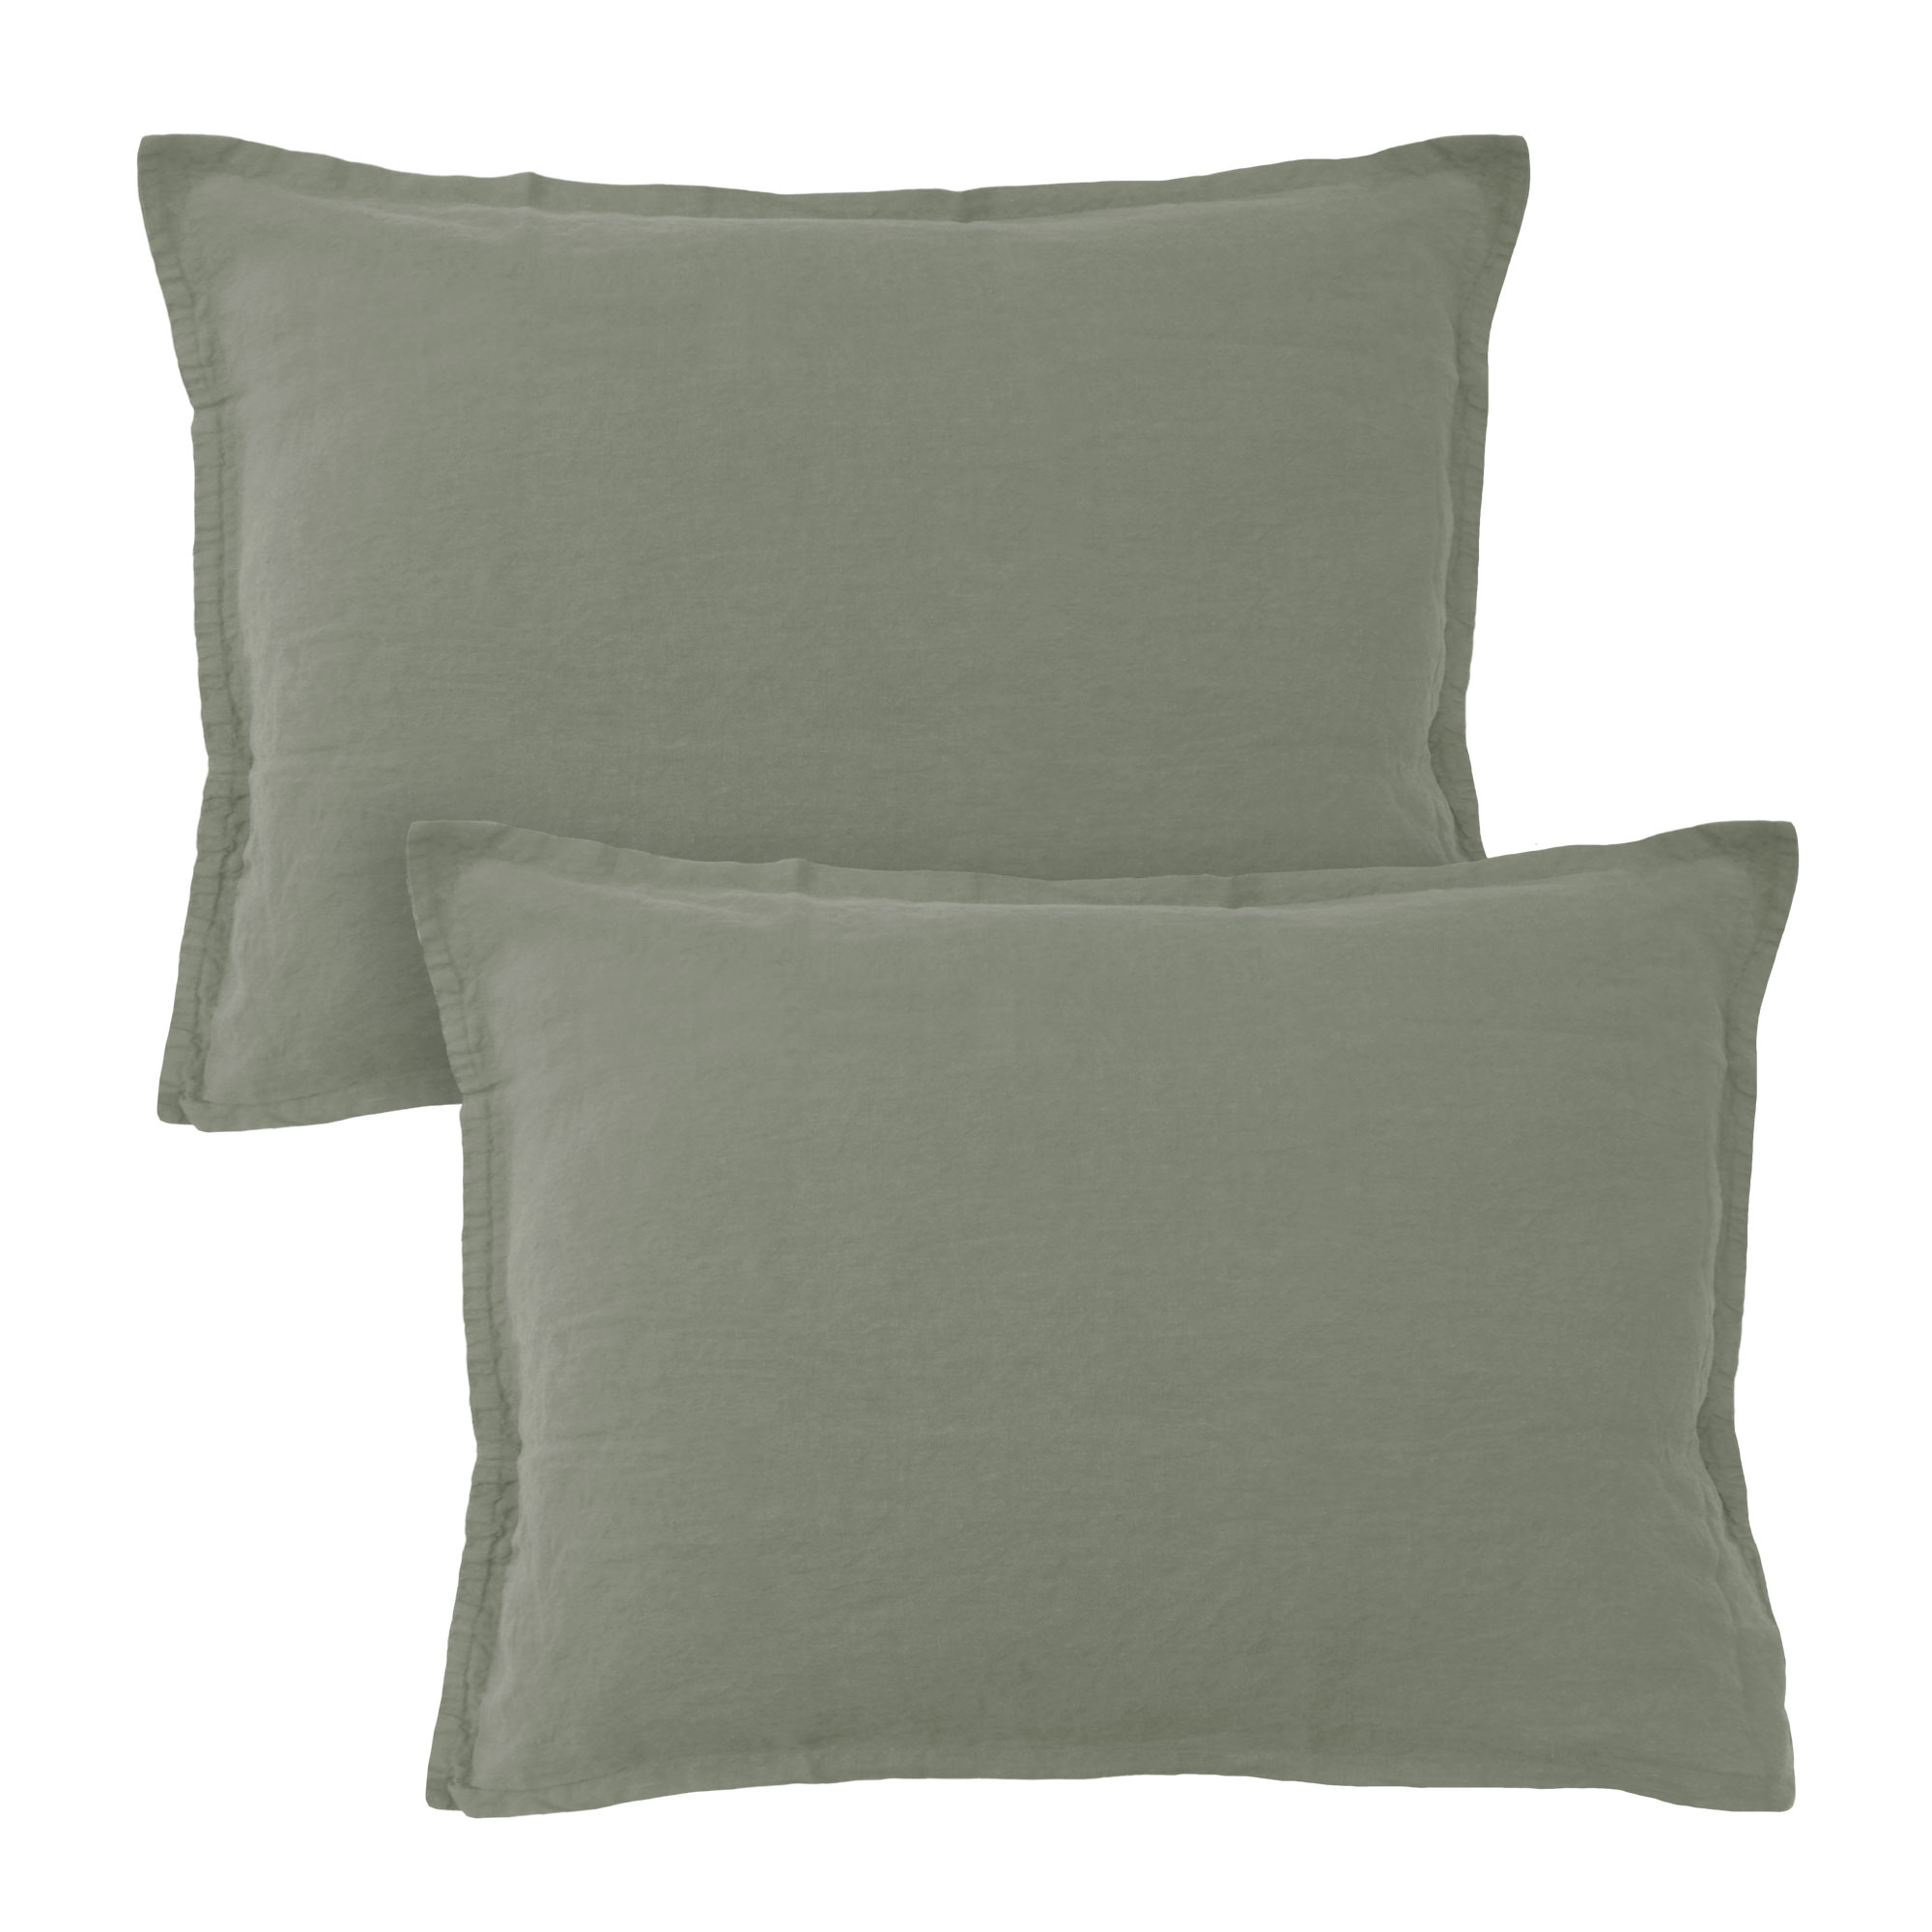 Personalised Pillow Cases UK: Design Custom Pillow Cases UK